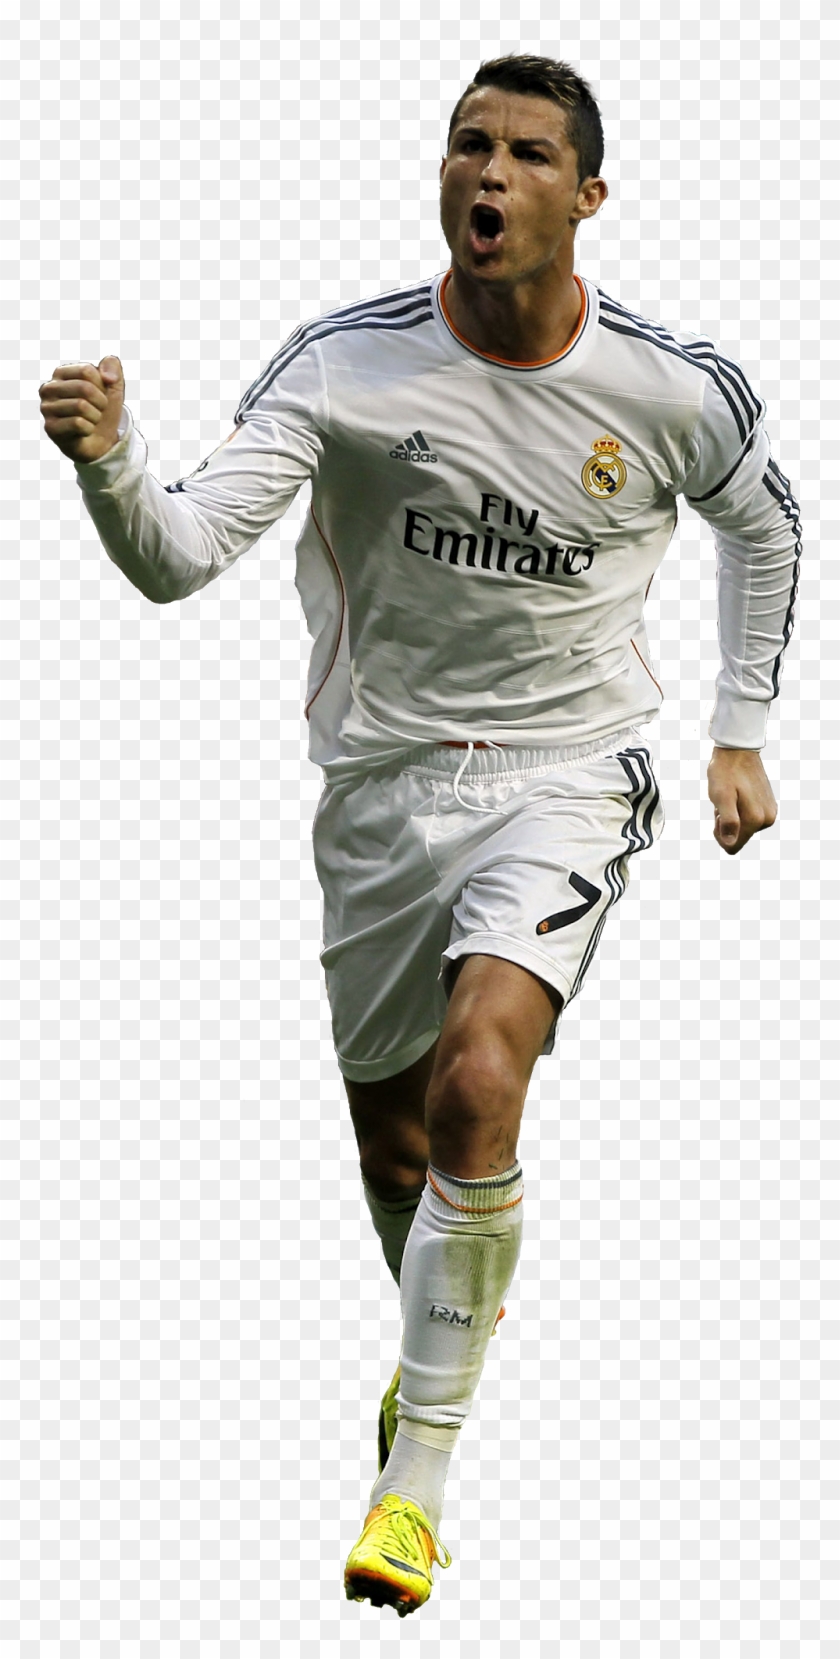 Cristiano Ronaldo No Background Clipart (#455211) - PikPng